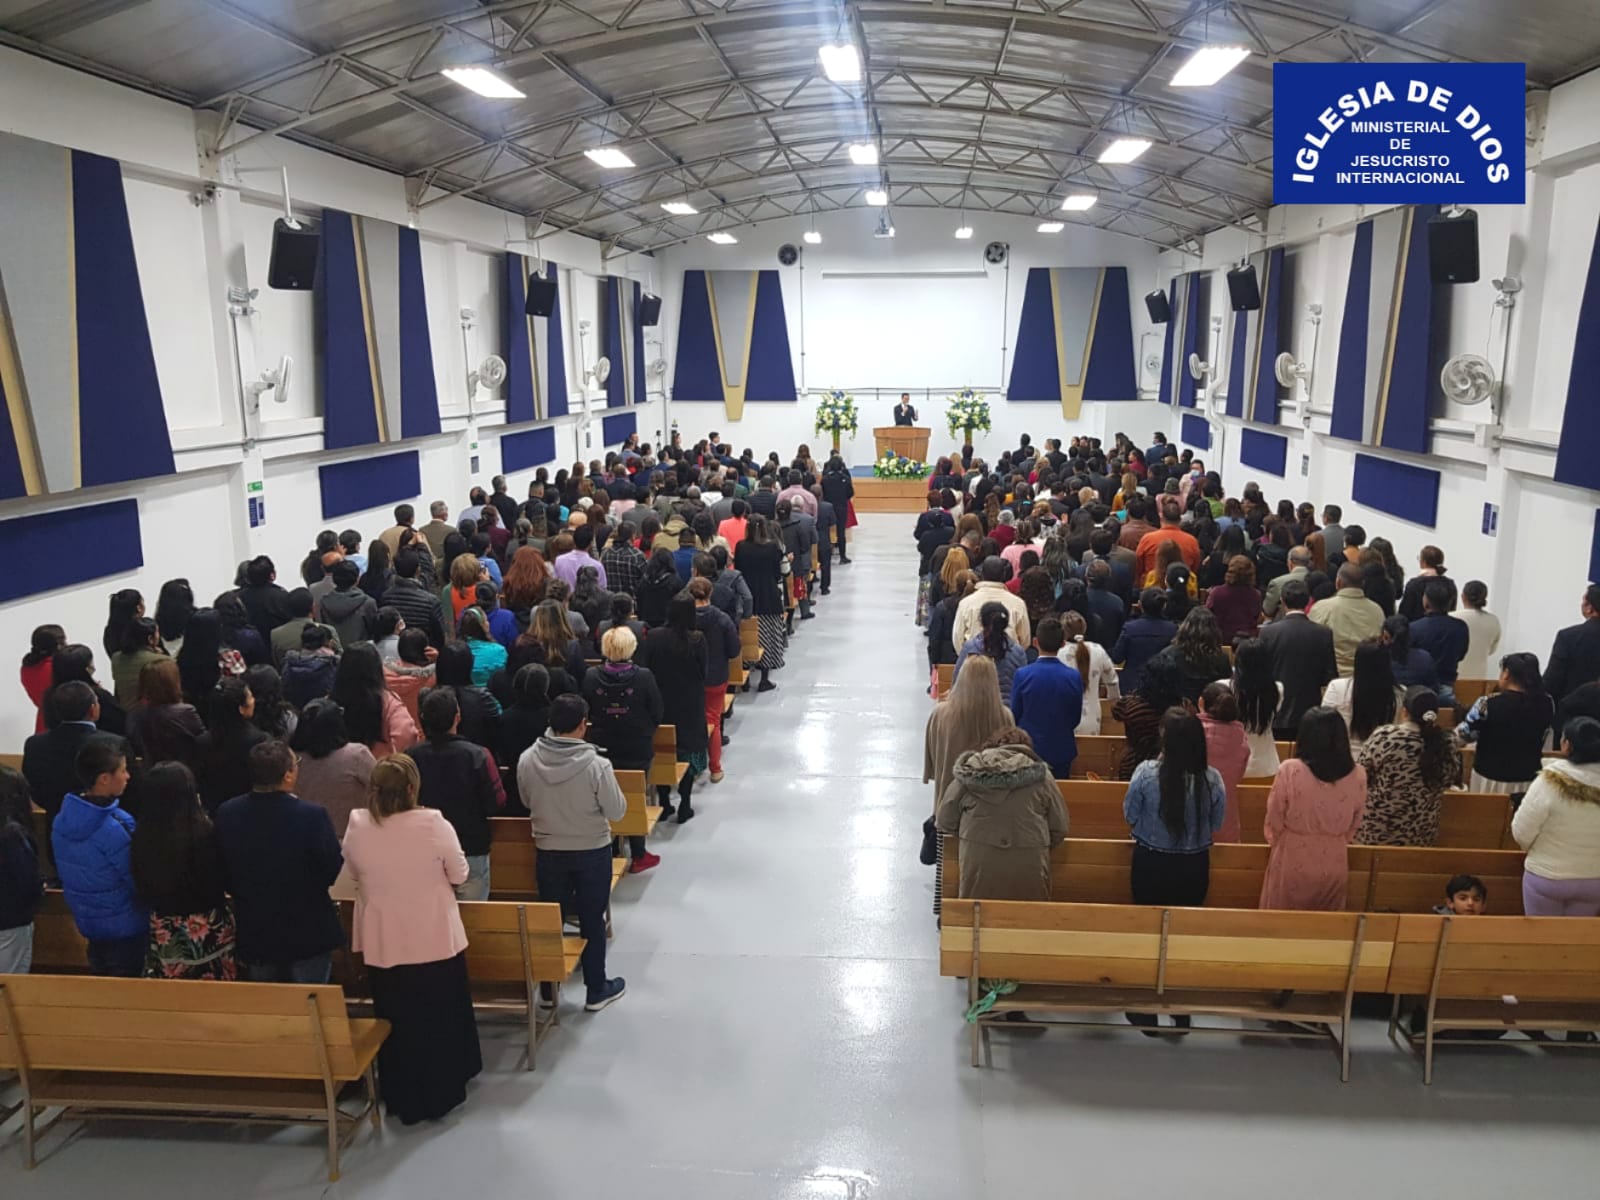 Fotos de la apertura de la Iglesia en Lijacá, Bogotá, Colombia  (Anteriormente Verbenal) - Iglesia de Dios Ministerial de Jesucristo  Internacional - IDMJI